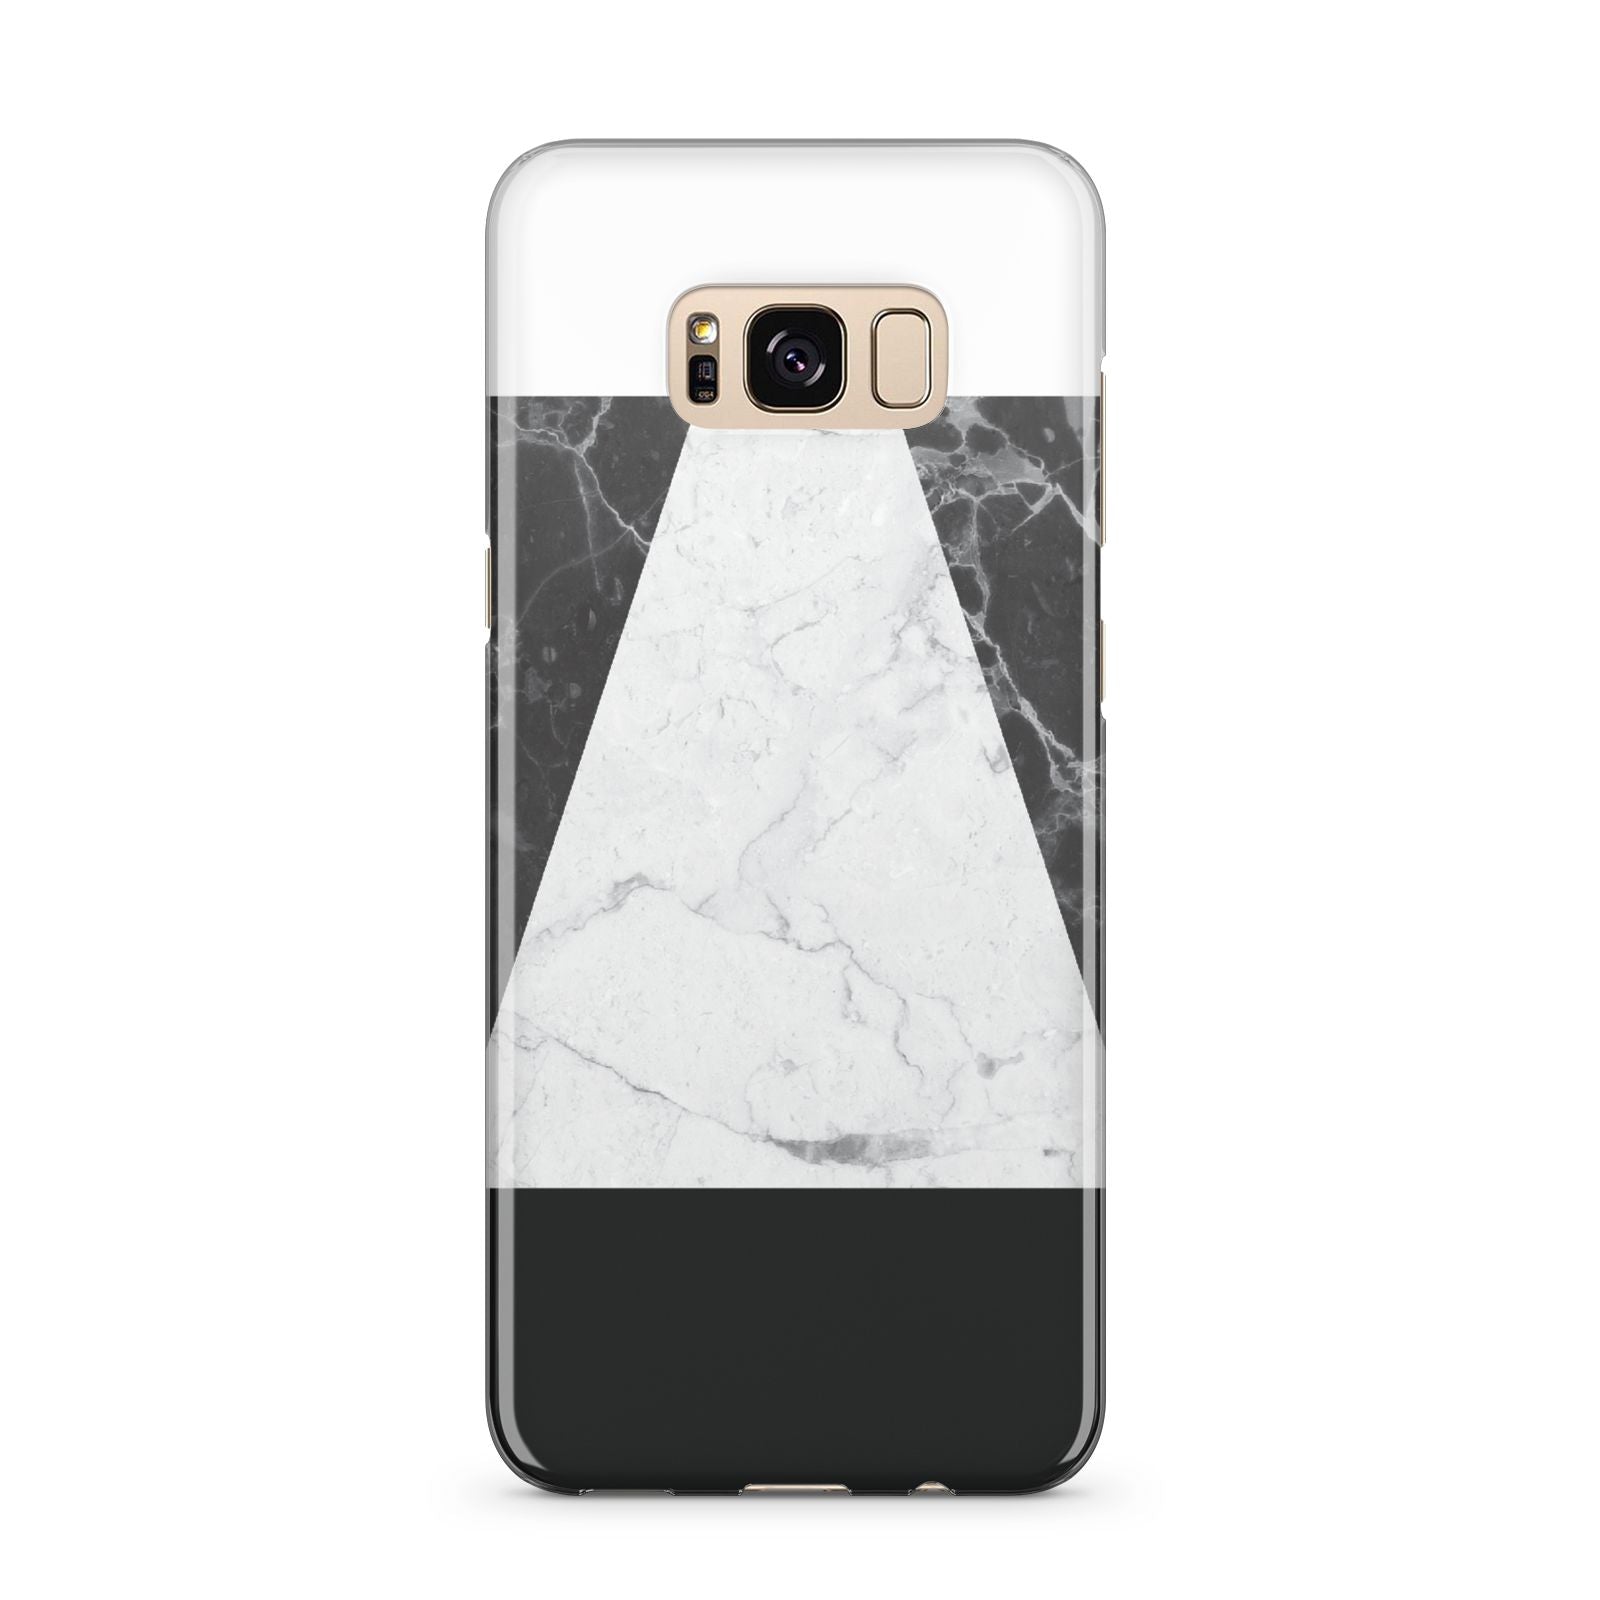 Marble White Black Samsung Galaxy S8 Plus Case